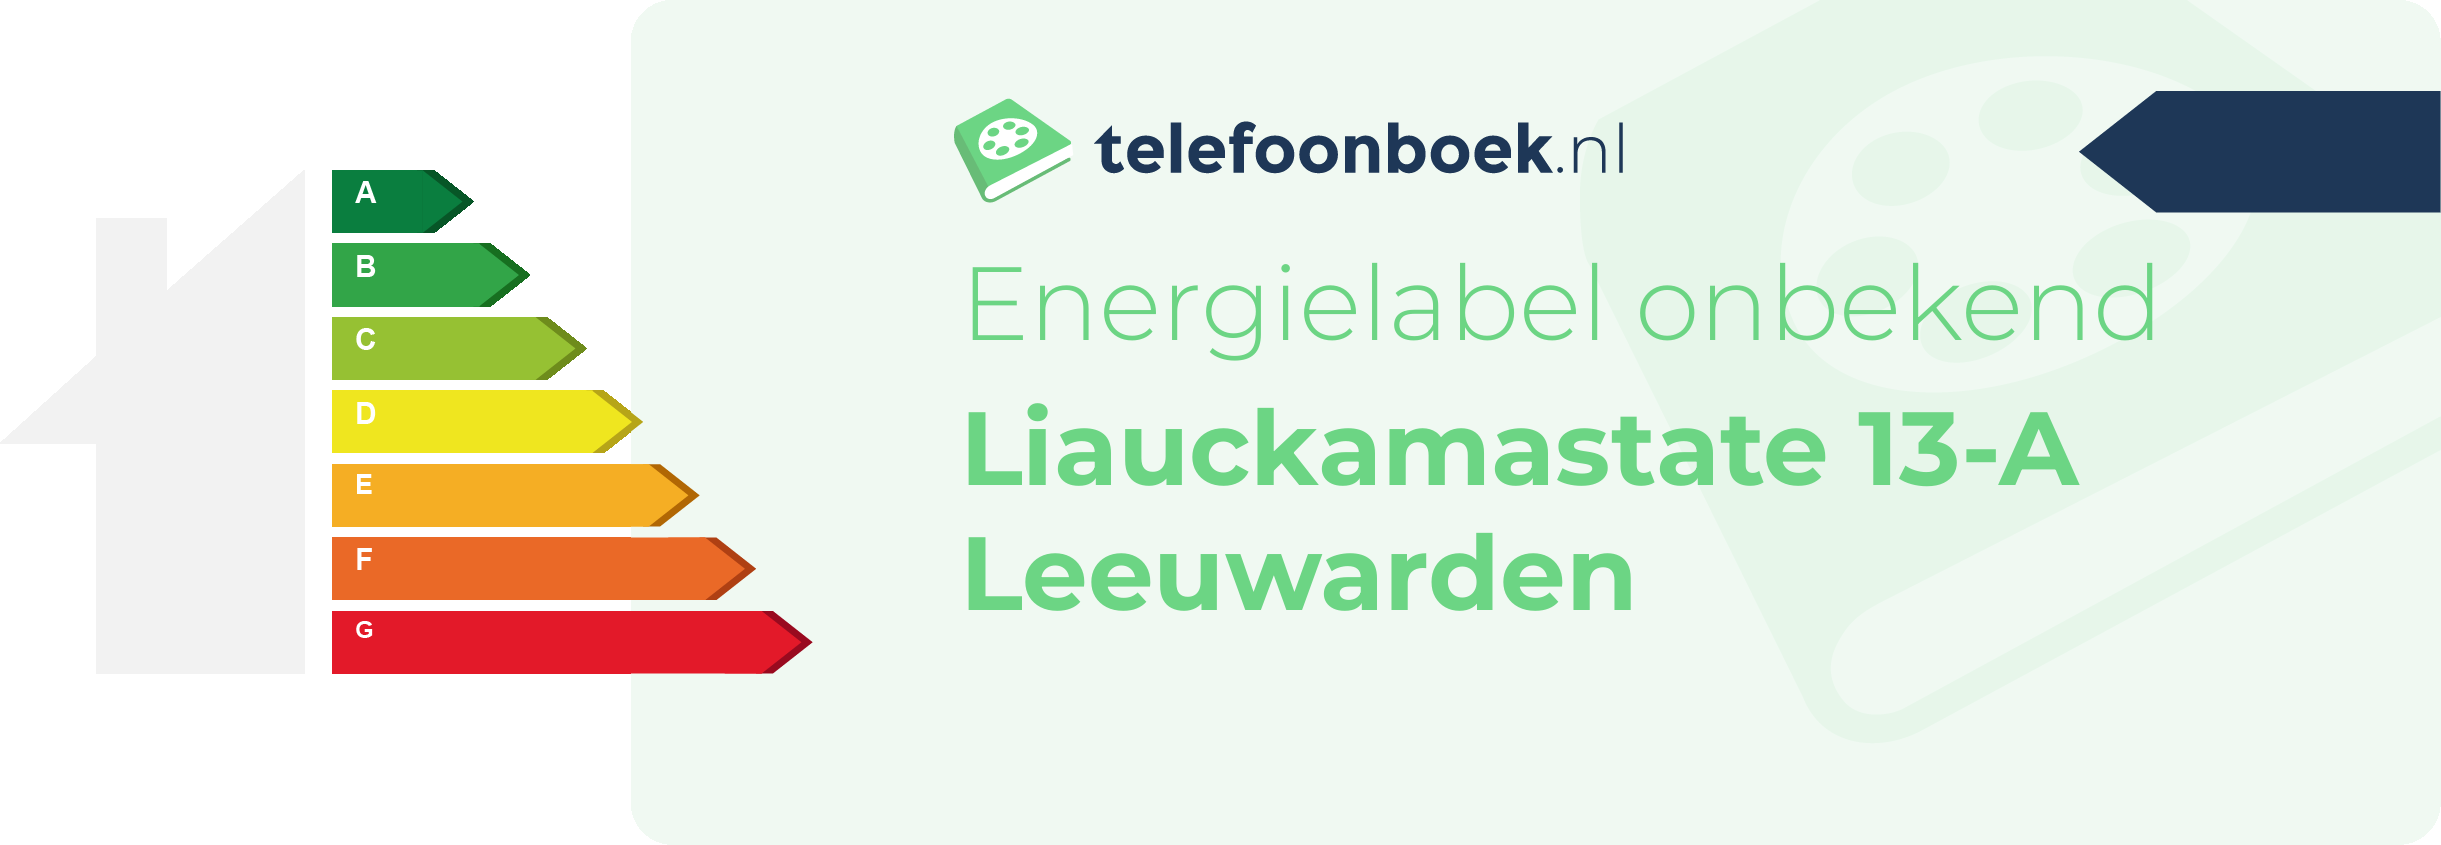 Energielabel Liauckamastate 13-A Leeuwarden